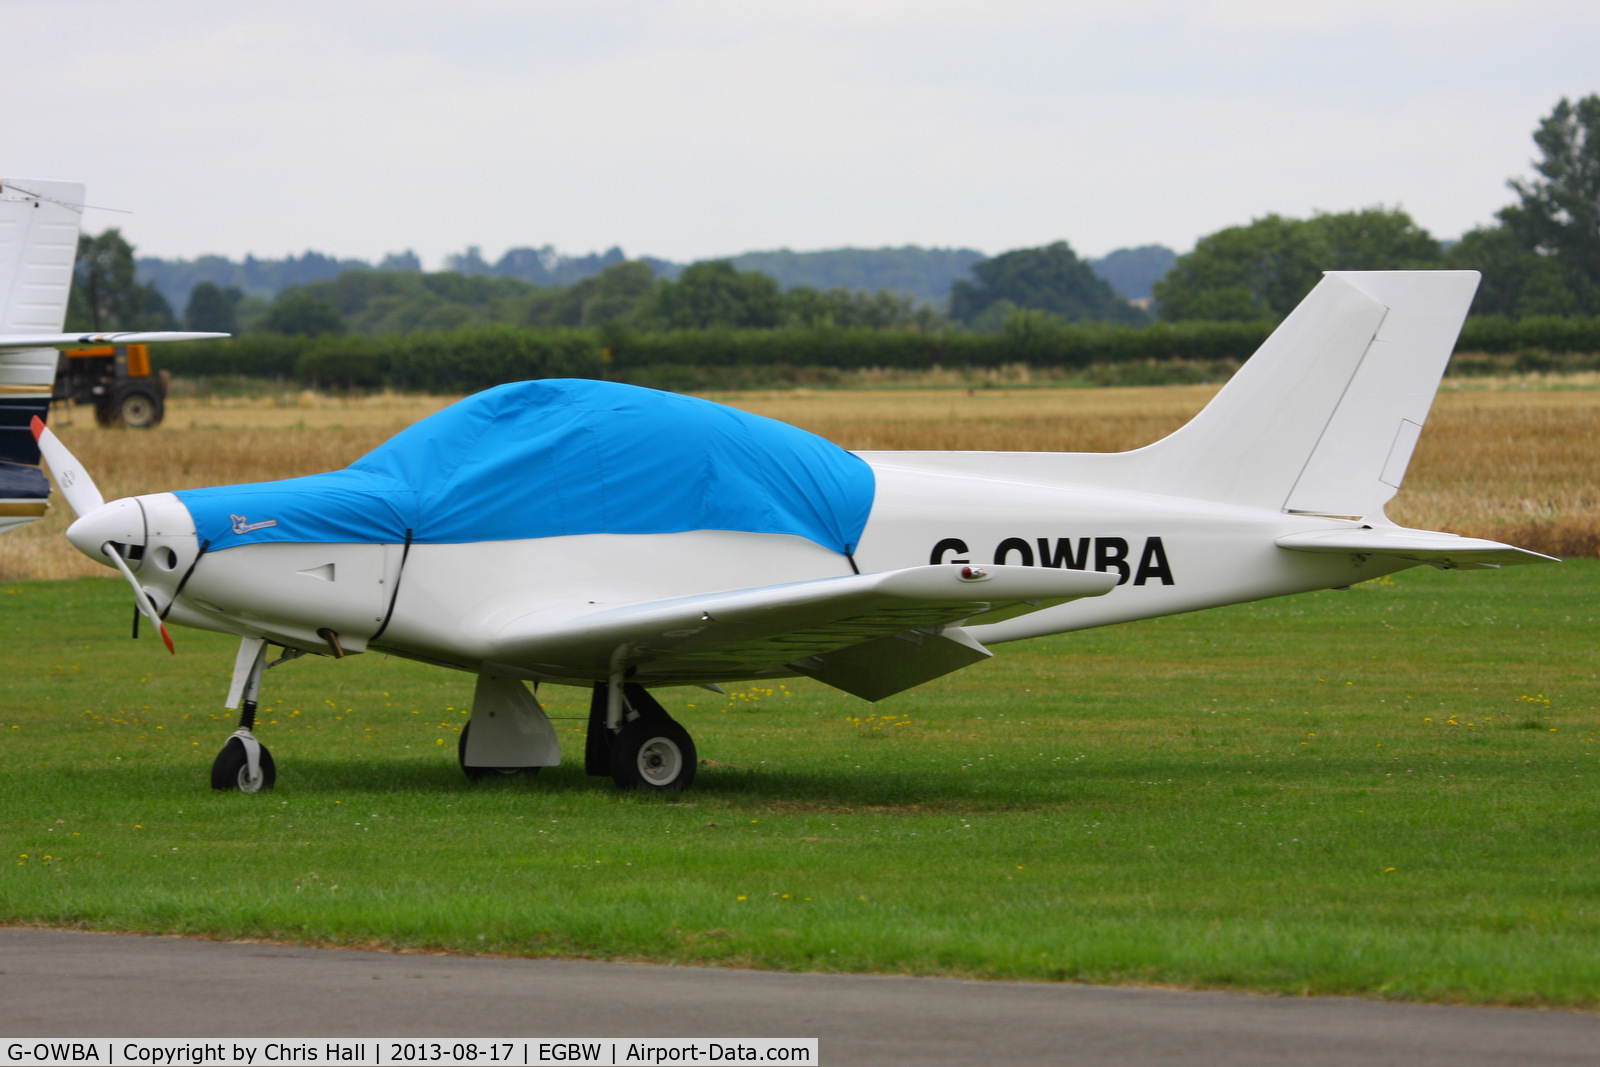 G-OWBA, 2013 Alpi Aviation Pioneer 300 C/N LAA 330-15155, privately owned